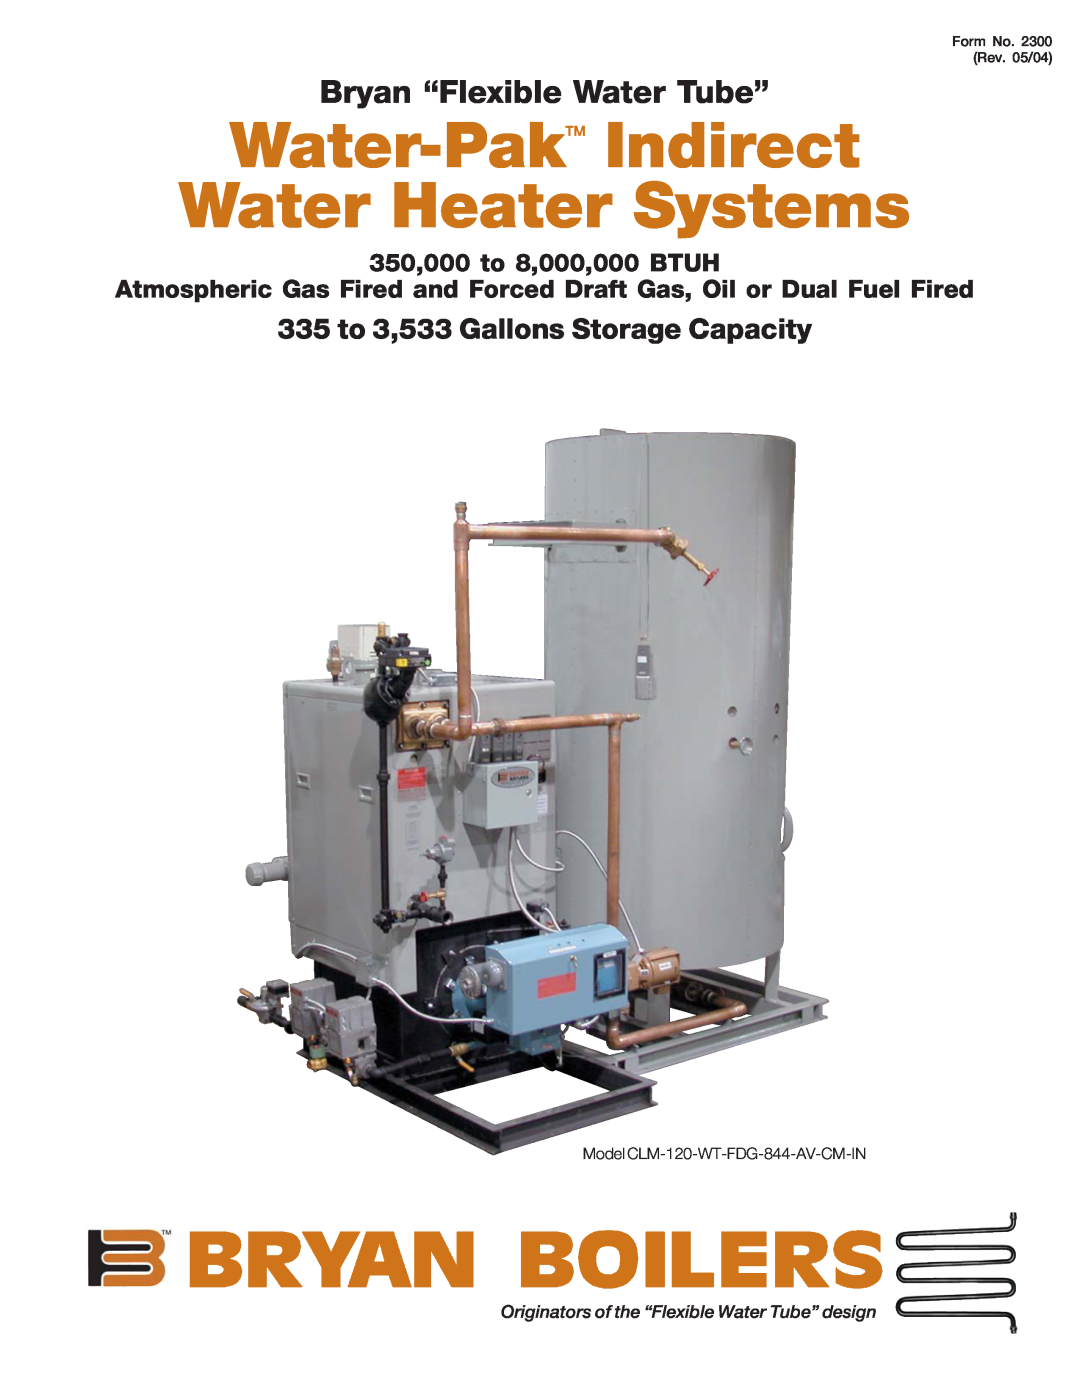 Bryan Boilers CLM-120-WT-FDG-844-AV-CM-IN manual Water-PakTM Indirect Water Heater Systems, Bryan “Flexible Water Tube” 